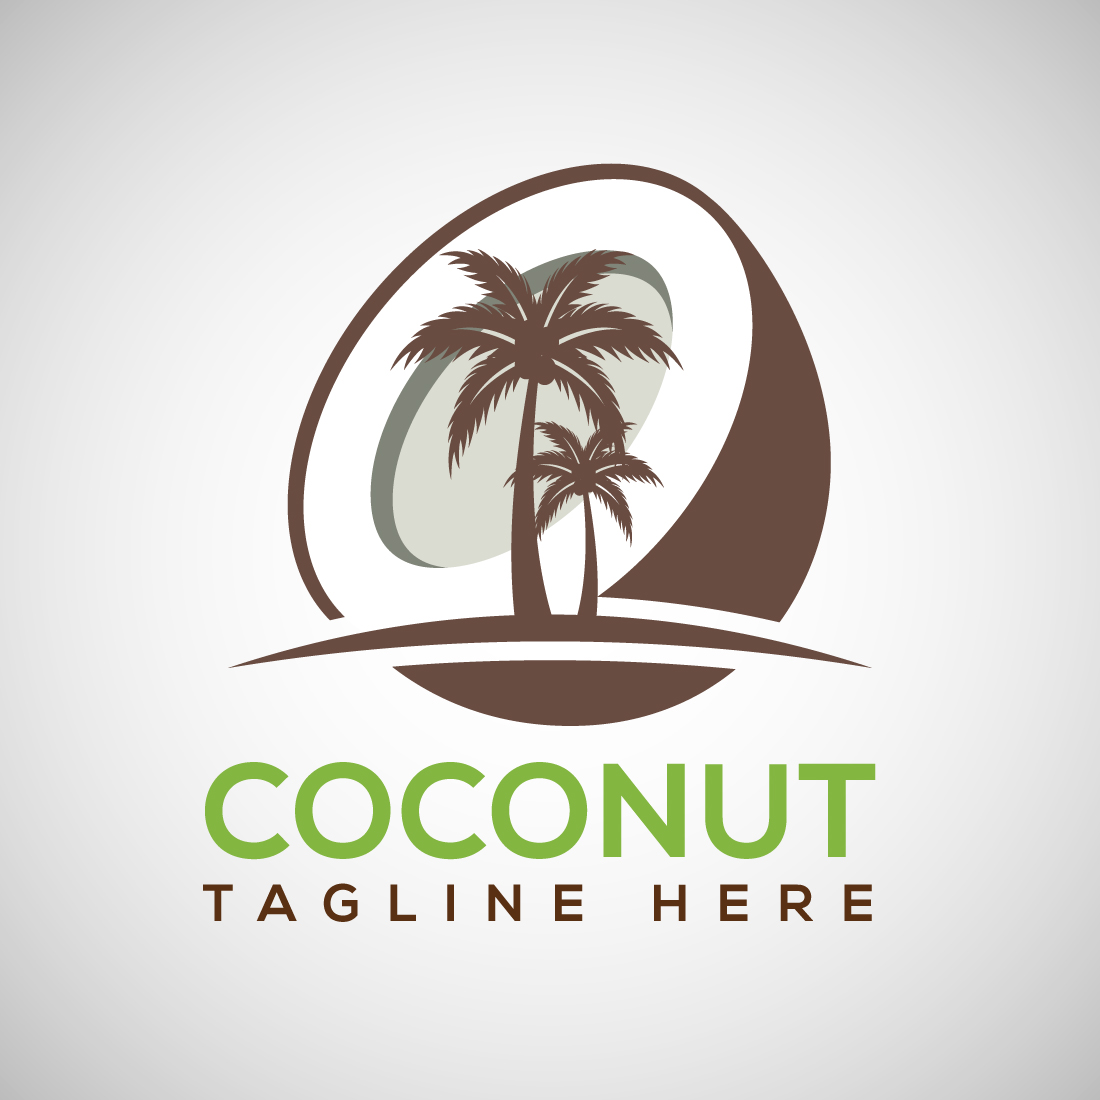 Stylish Coconut Logo Design cover image.